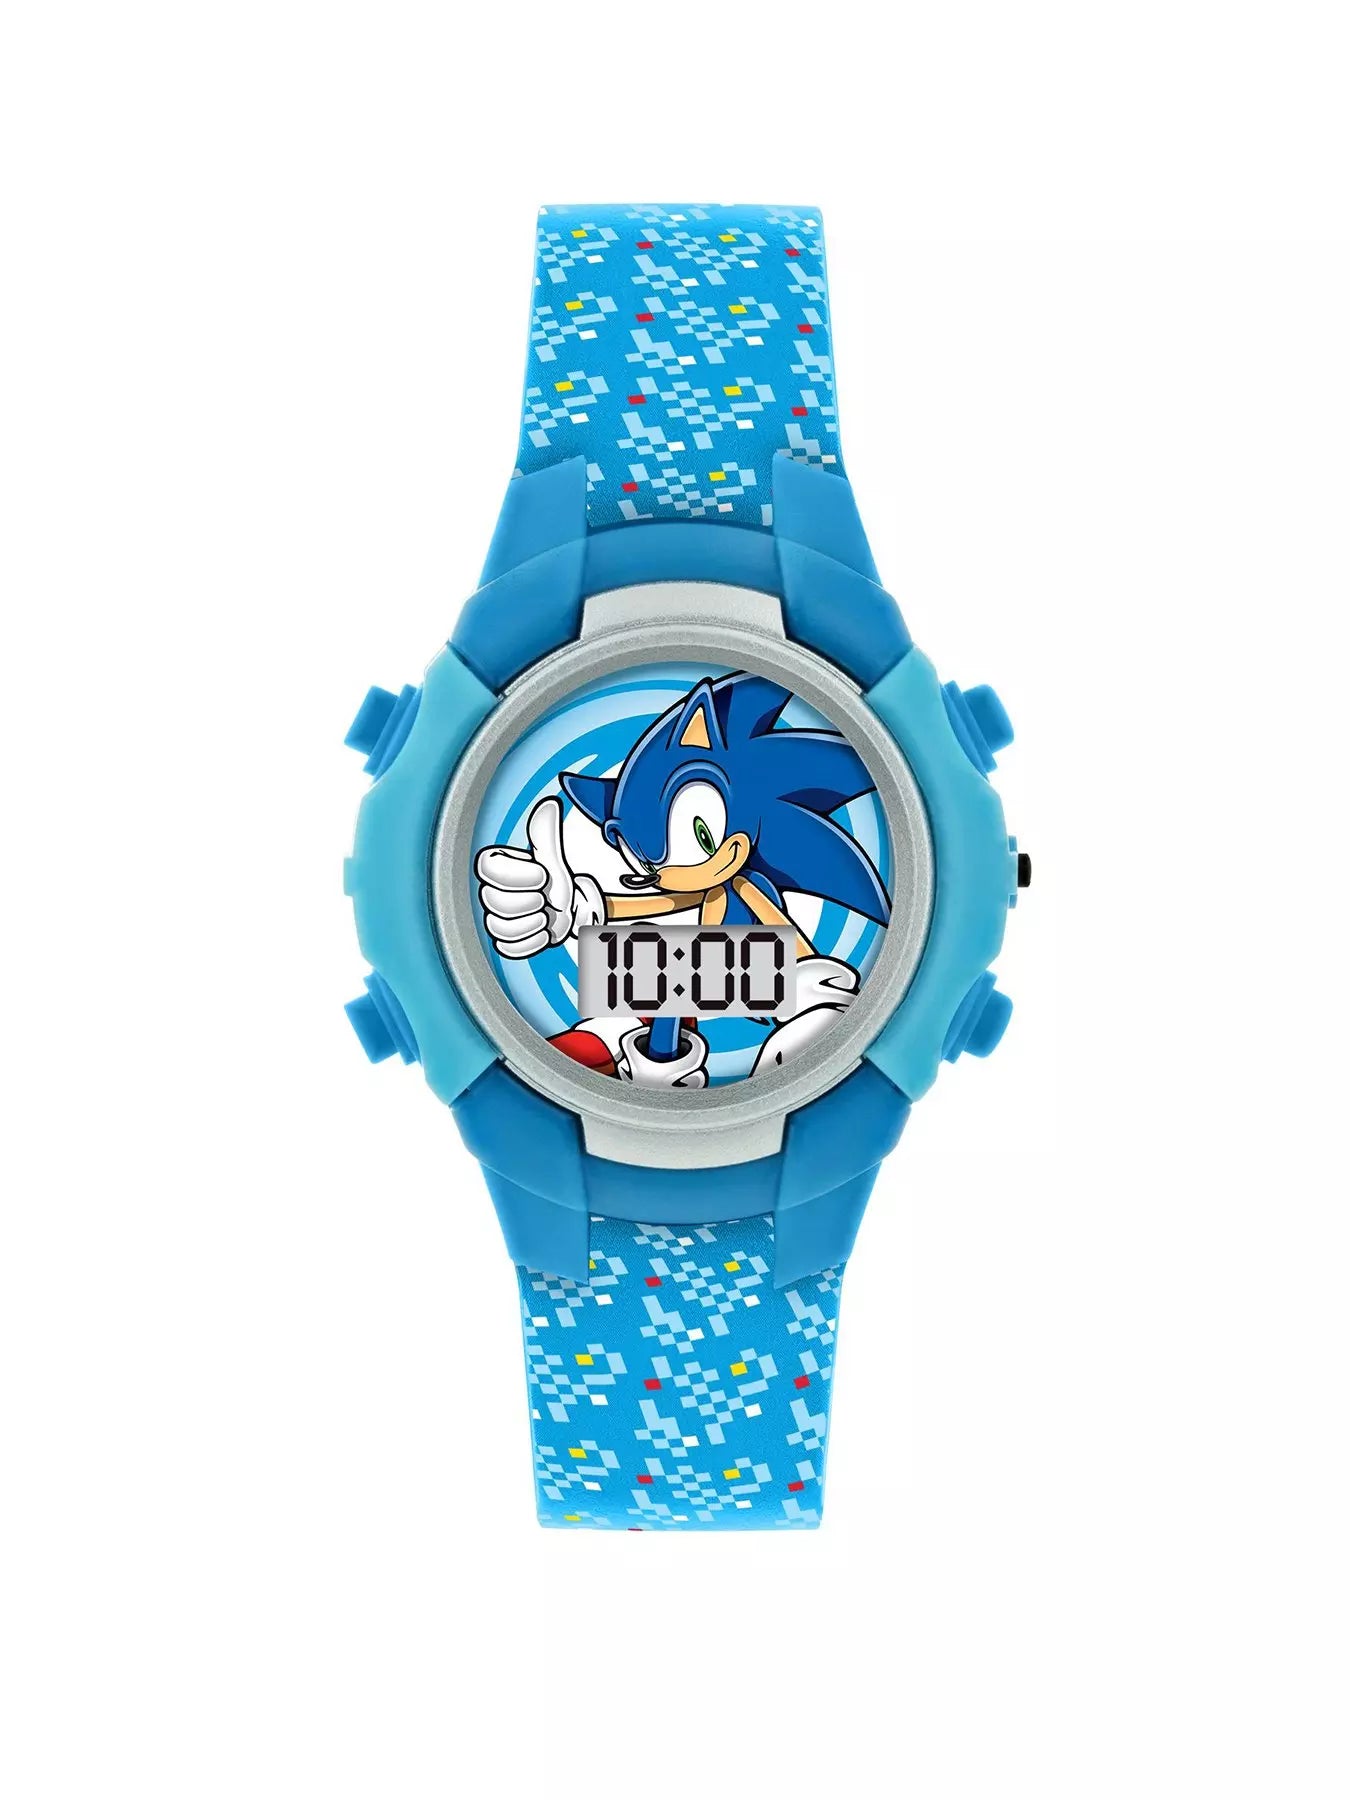 Sonic The Hedgehog Flashing LCD Watch